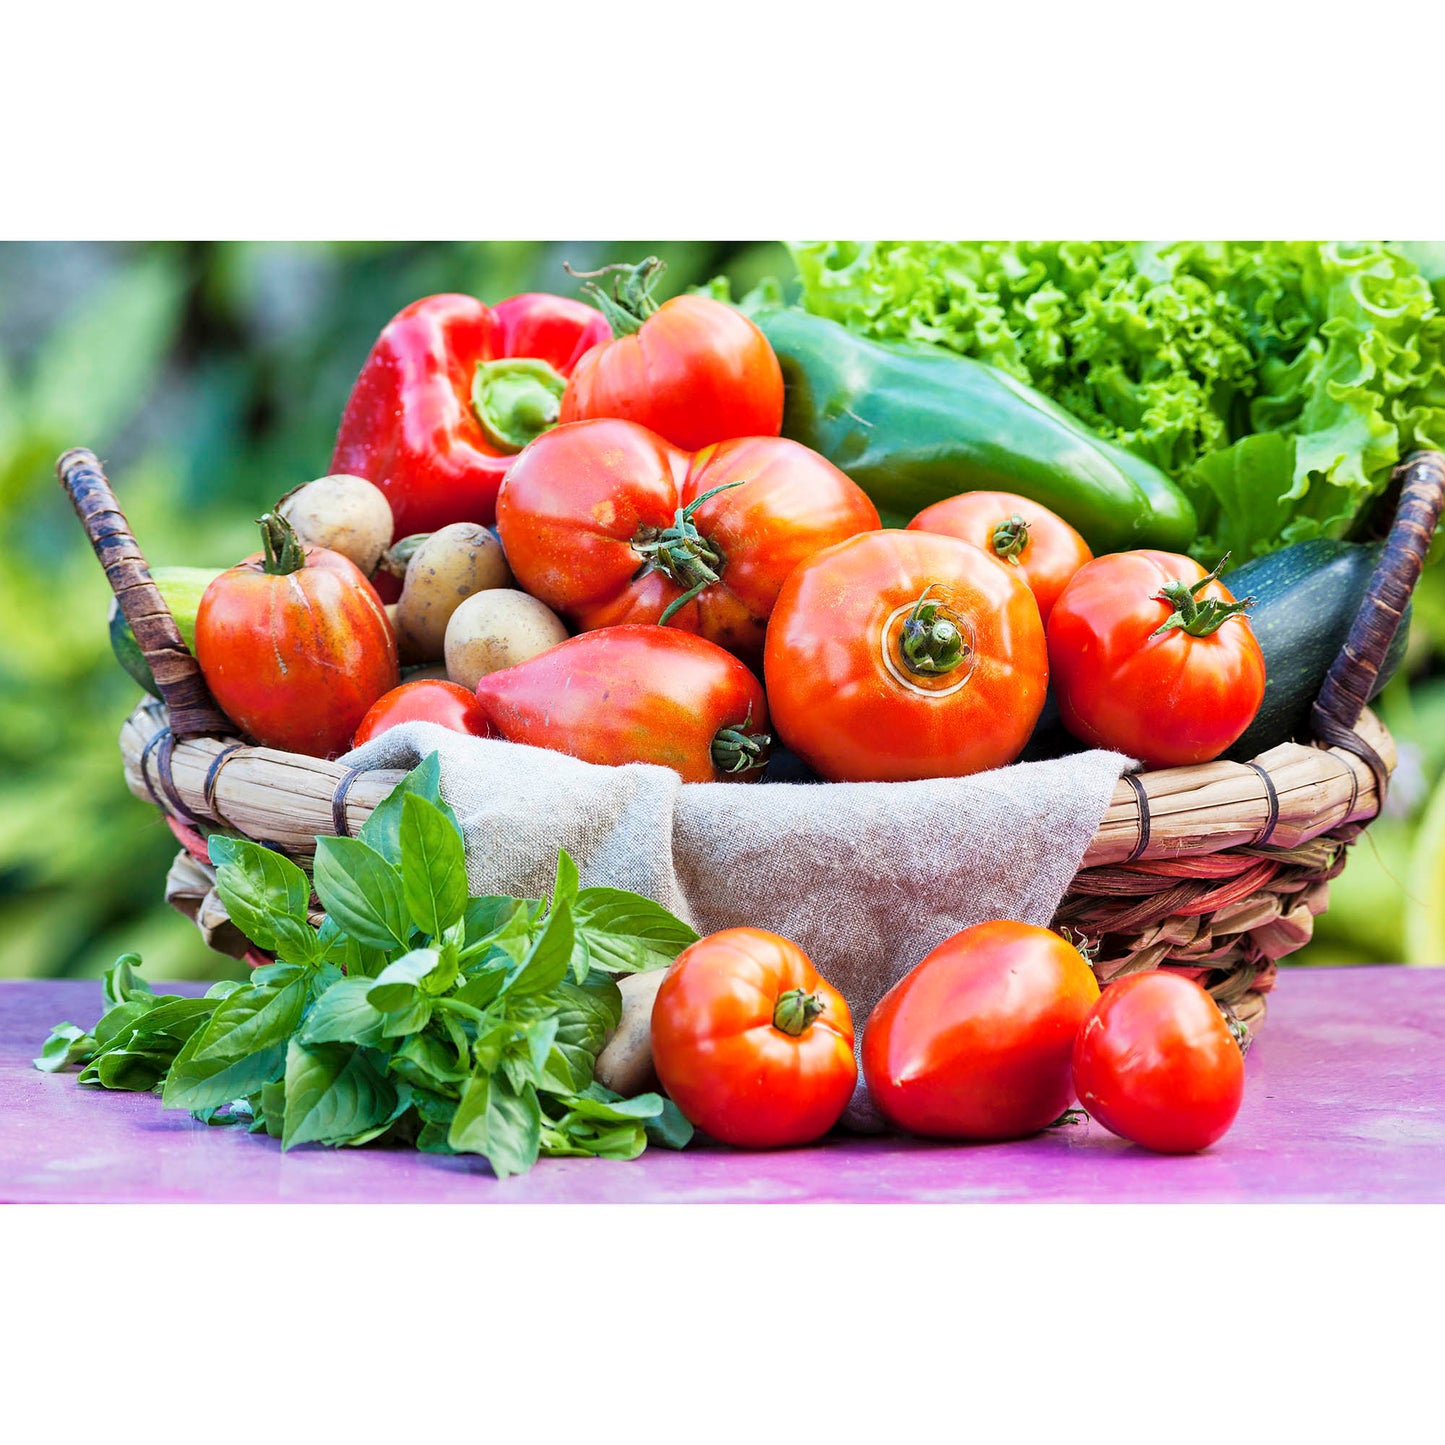 23,000 Heirloom Seeds - 61 Varieties Vegetables Fruits Non-GMO Seeds